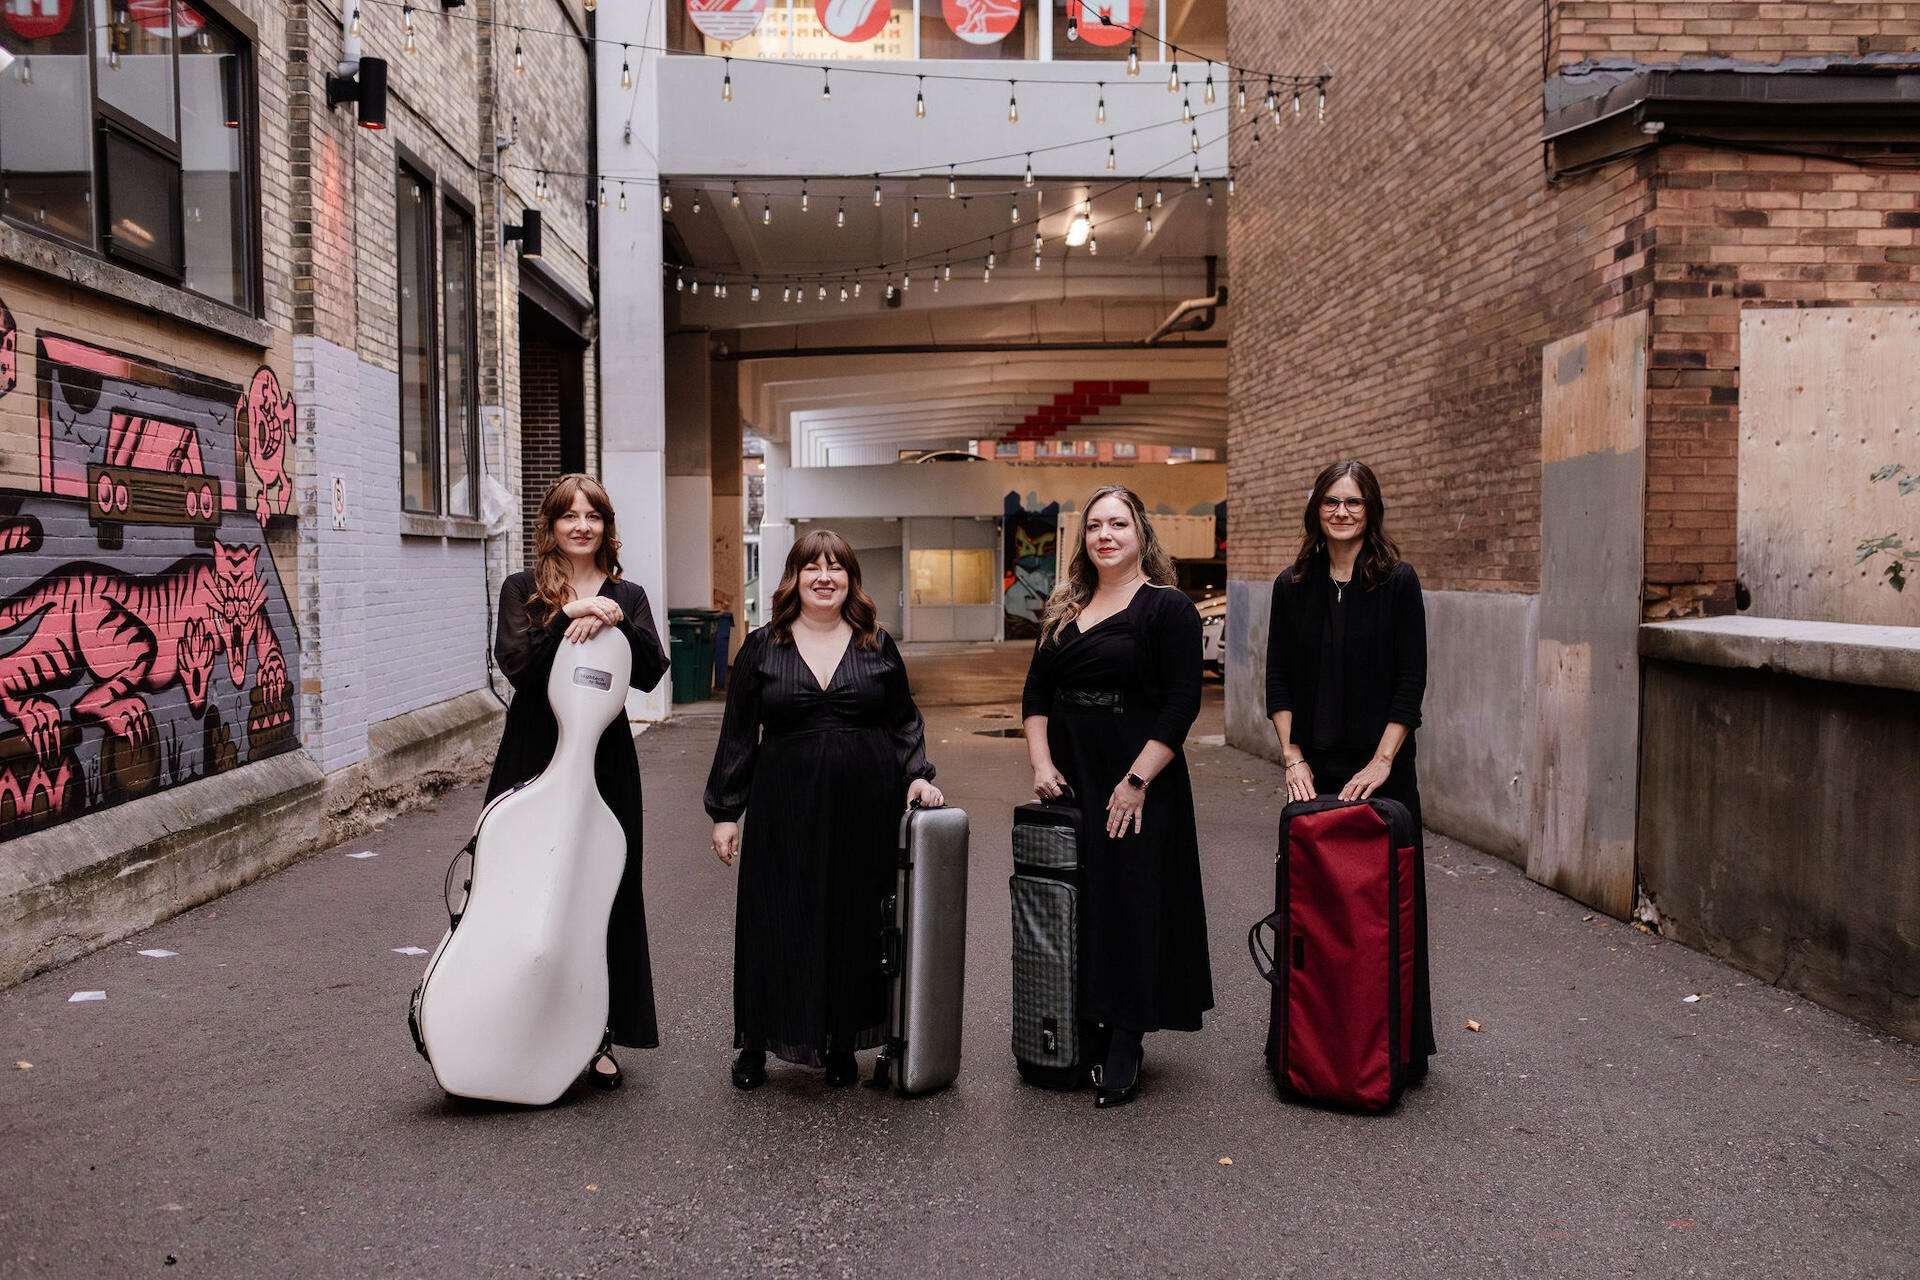 String quartet in Kitchener-Waterloo, ON.